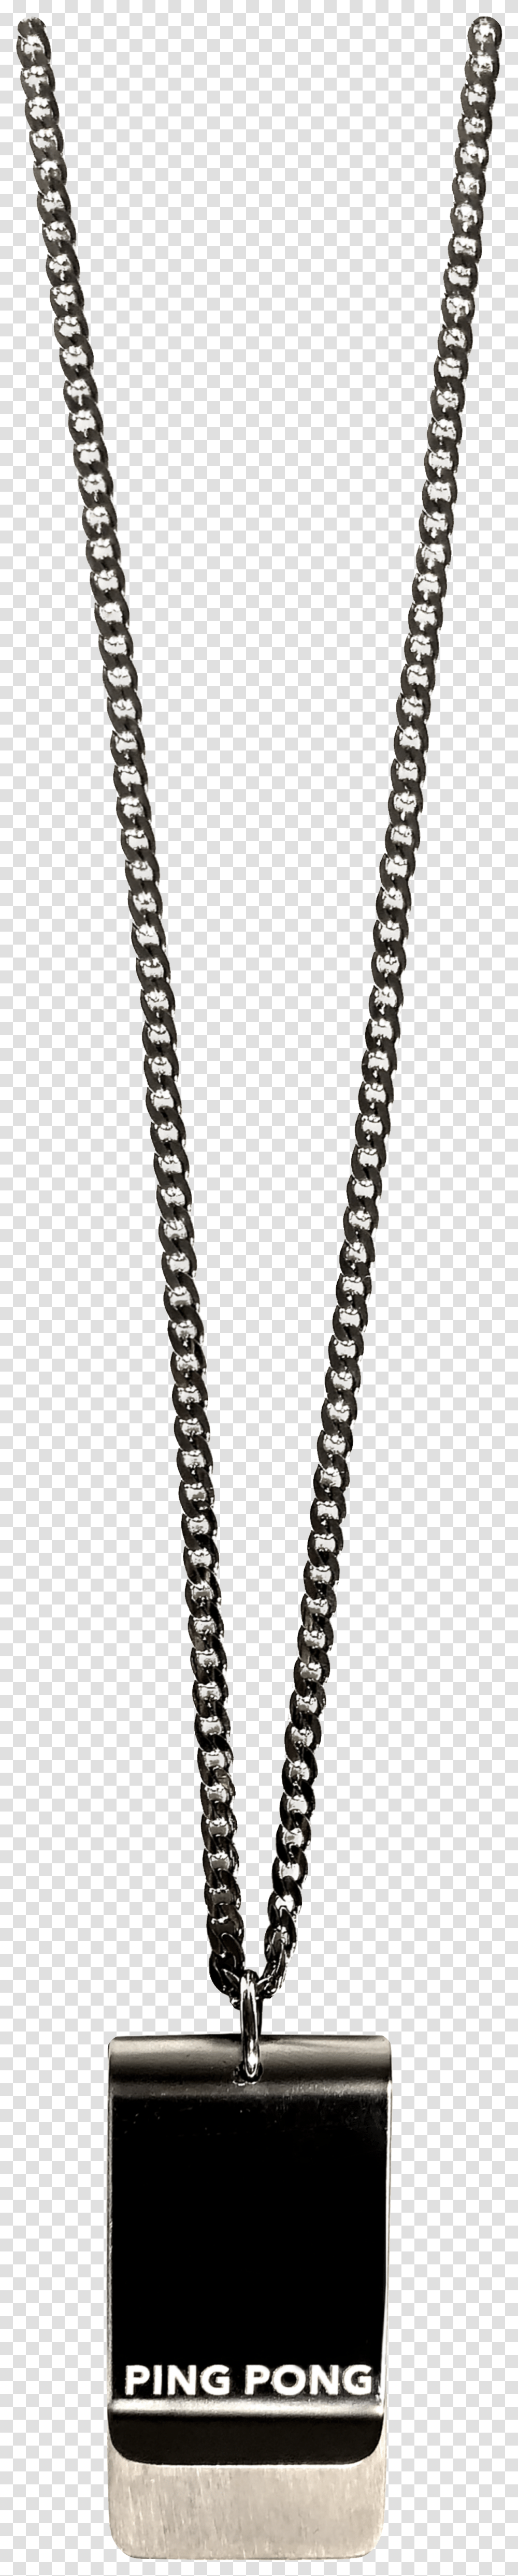 Image Of Money Clip Chain Locket, Diamond, Gemstone, Jewelry, Accessories Transparent Png